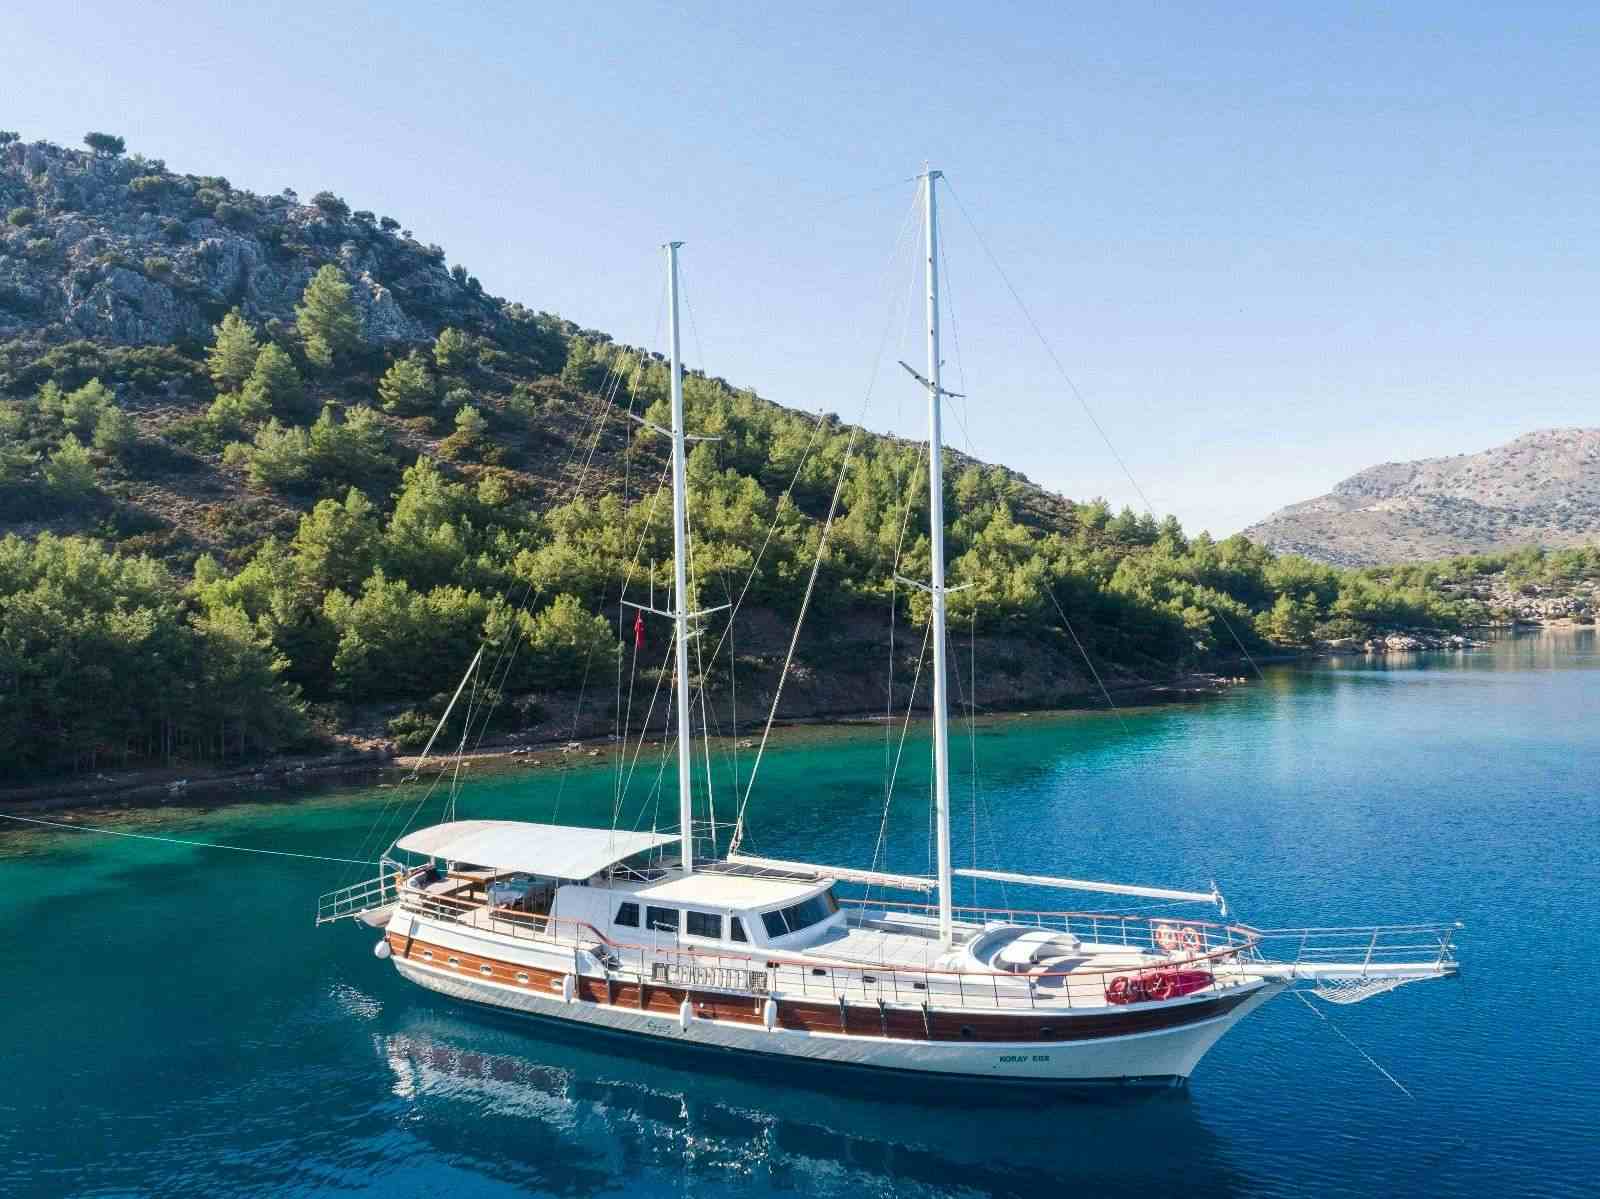 koray ege - Yacht Charter Athens & Boat hire in Greece & Turkey 1